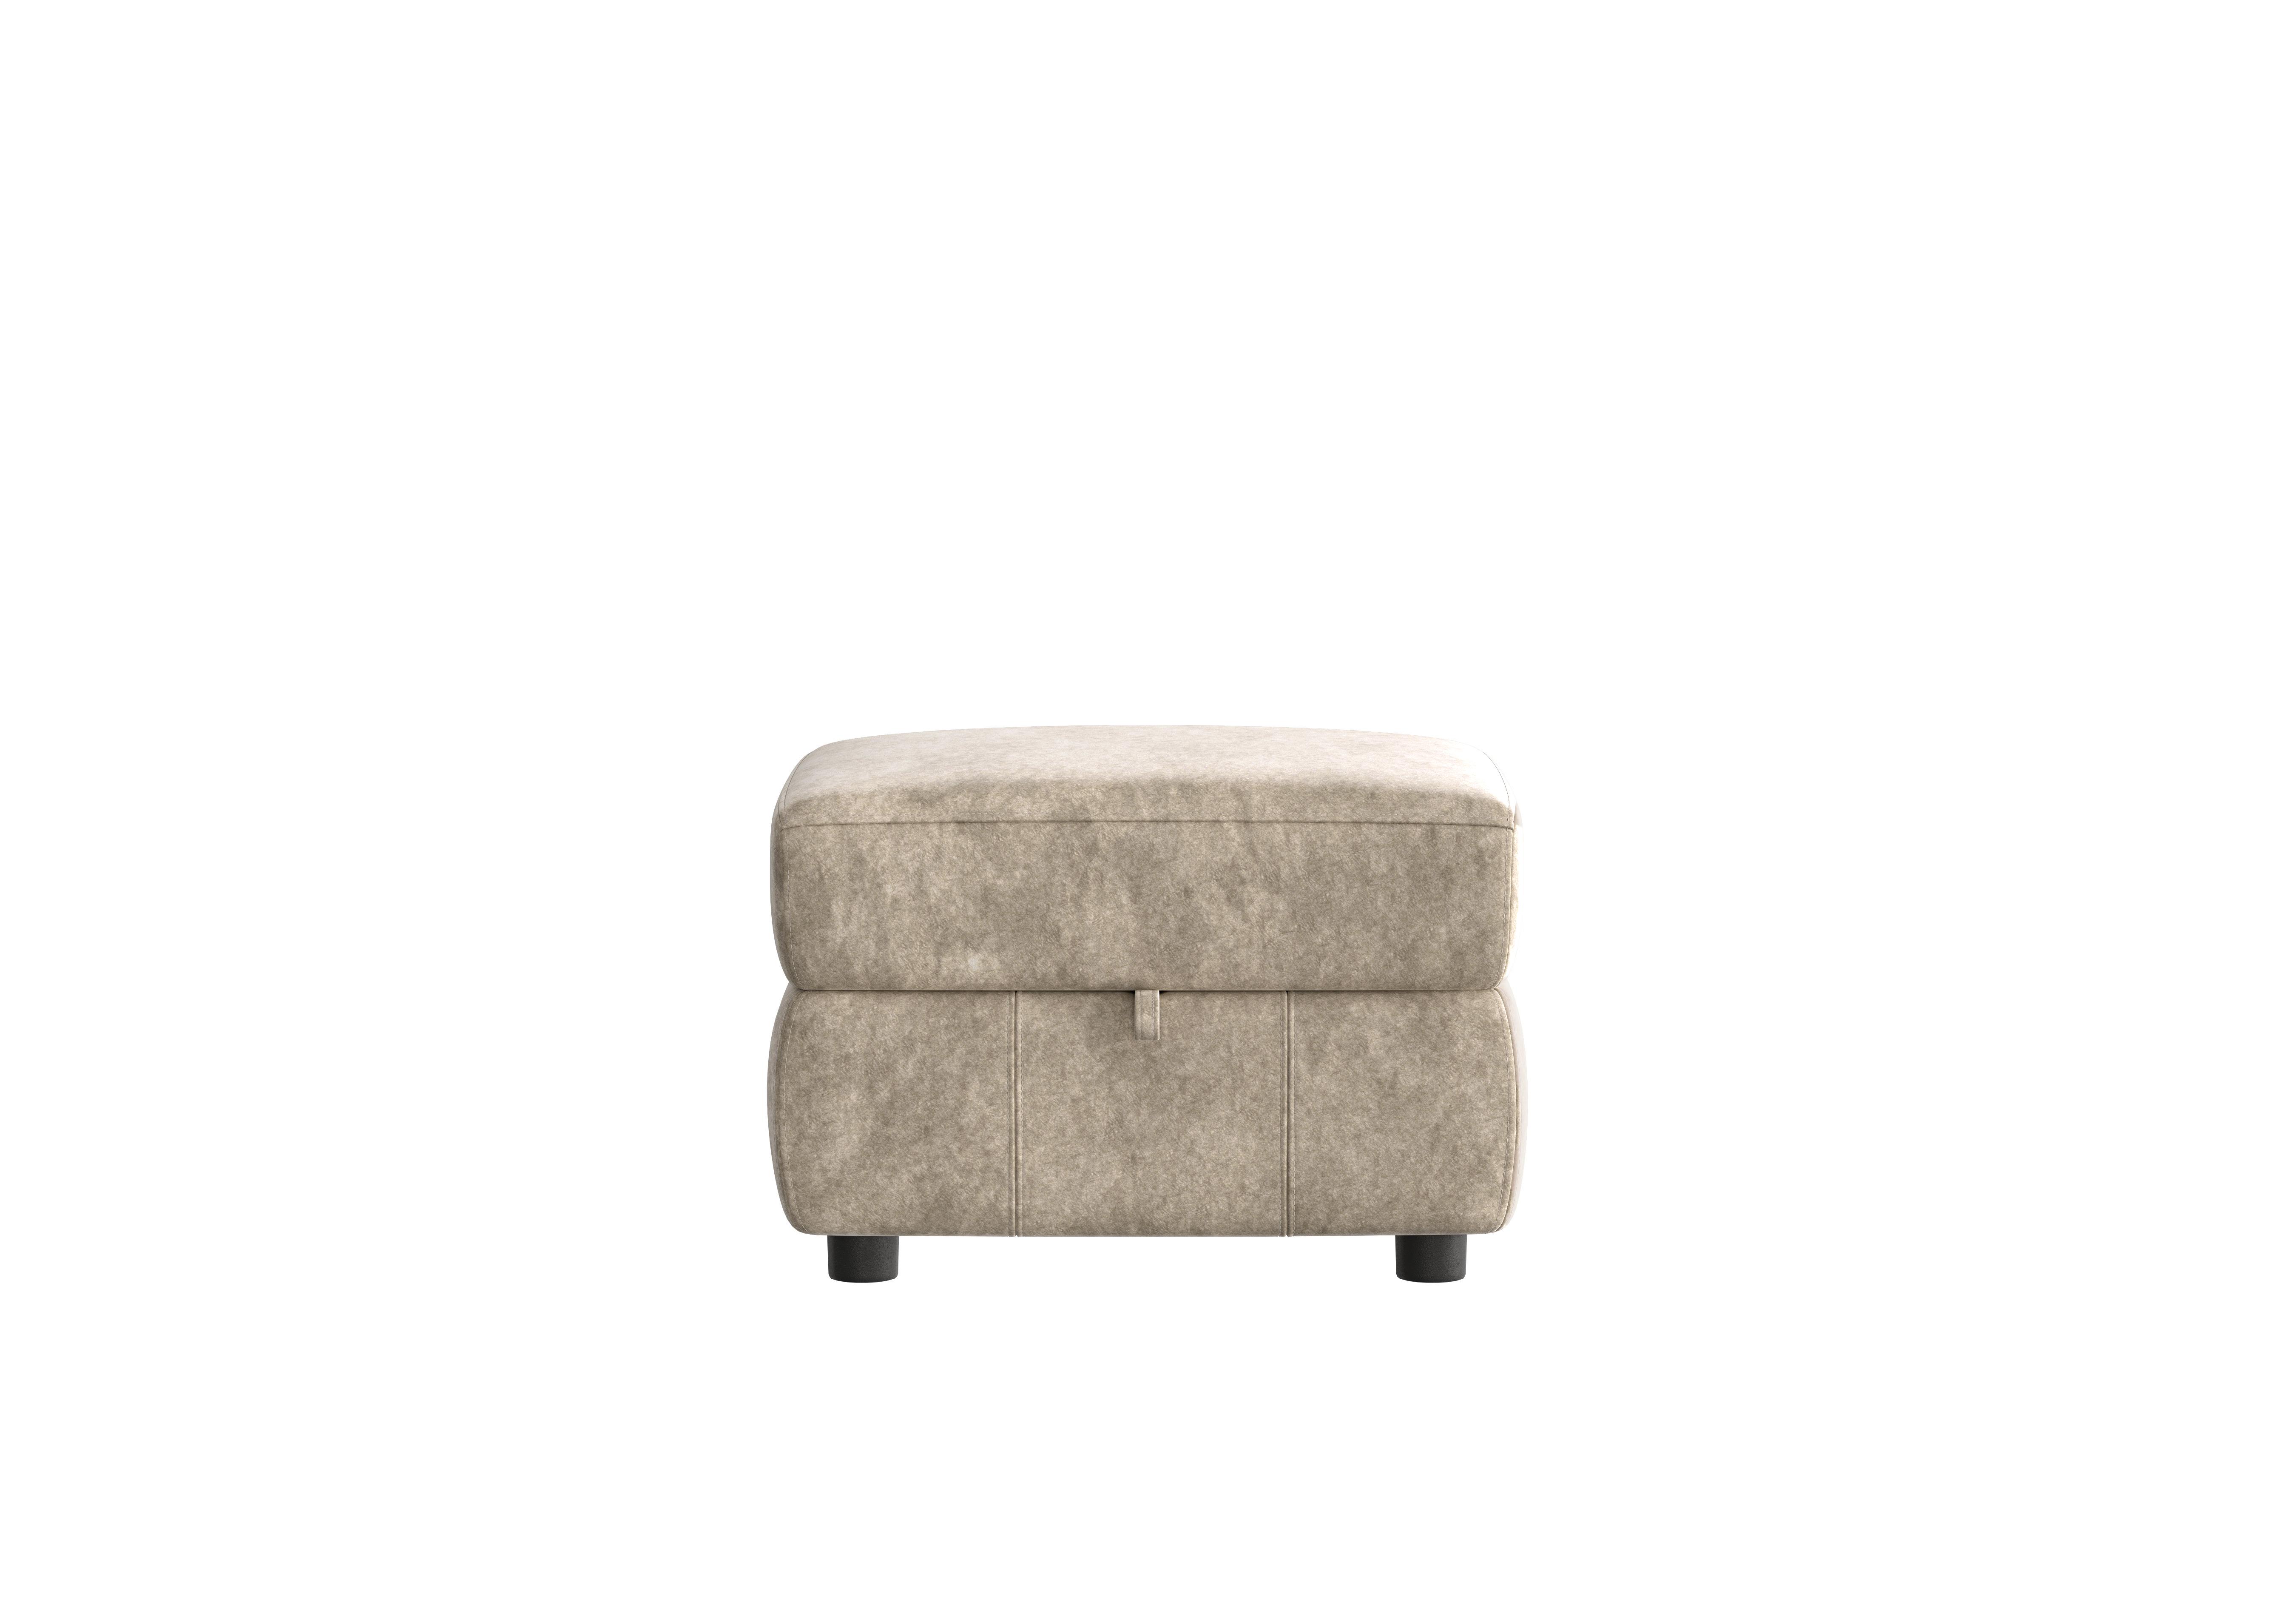 Relax Station Revive Fabric Storage Footstool in Bfa-Bnn-R26 Fv2 Cream on Furniture Village